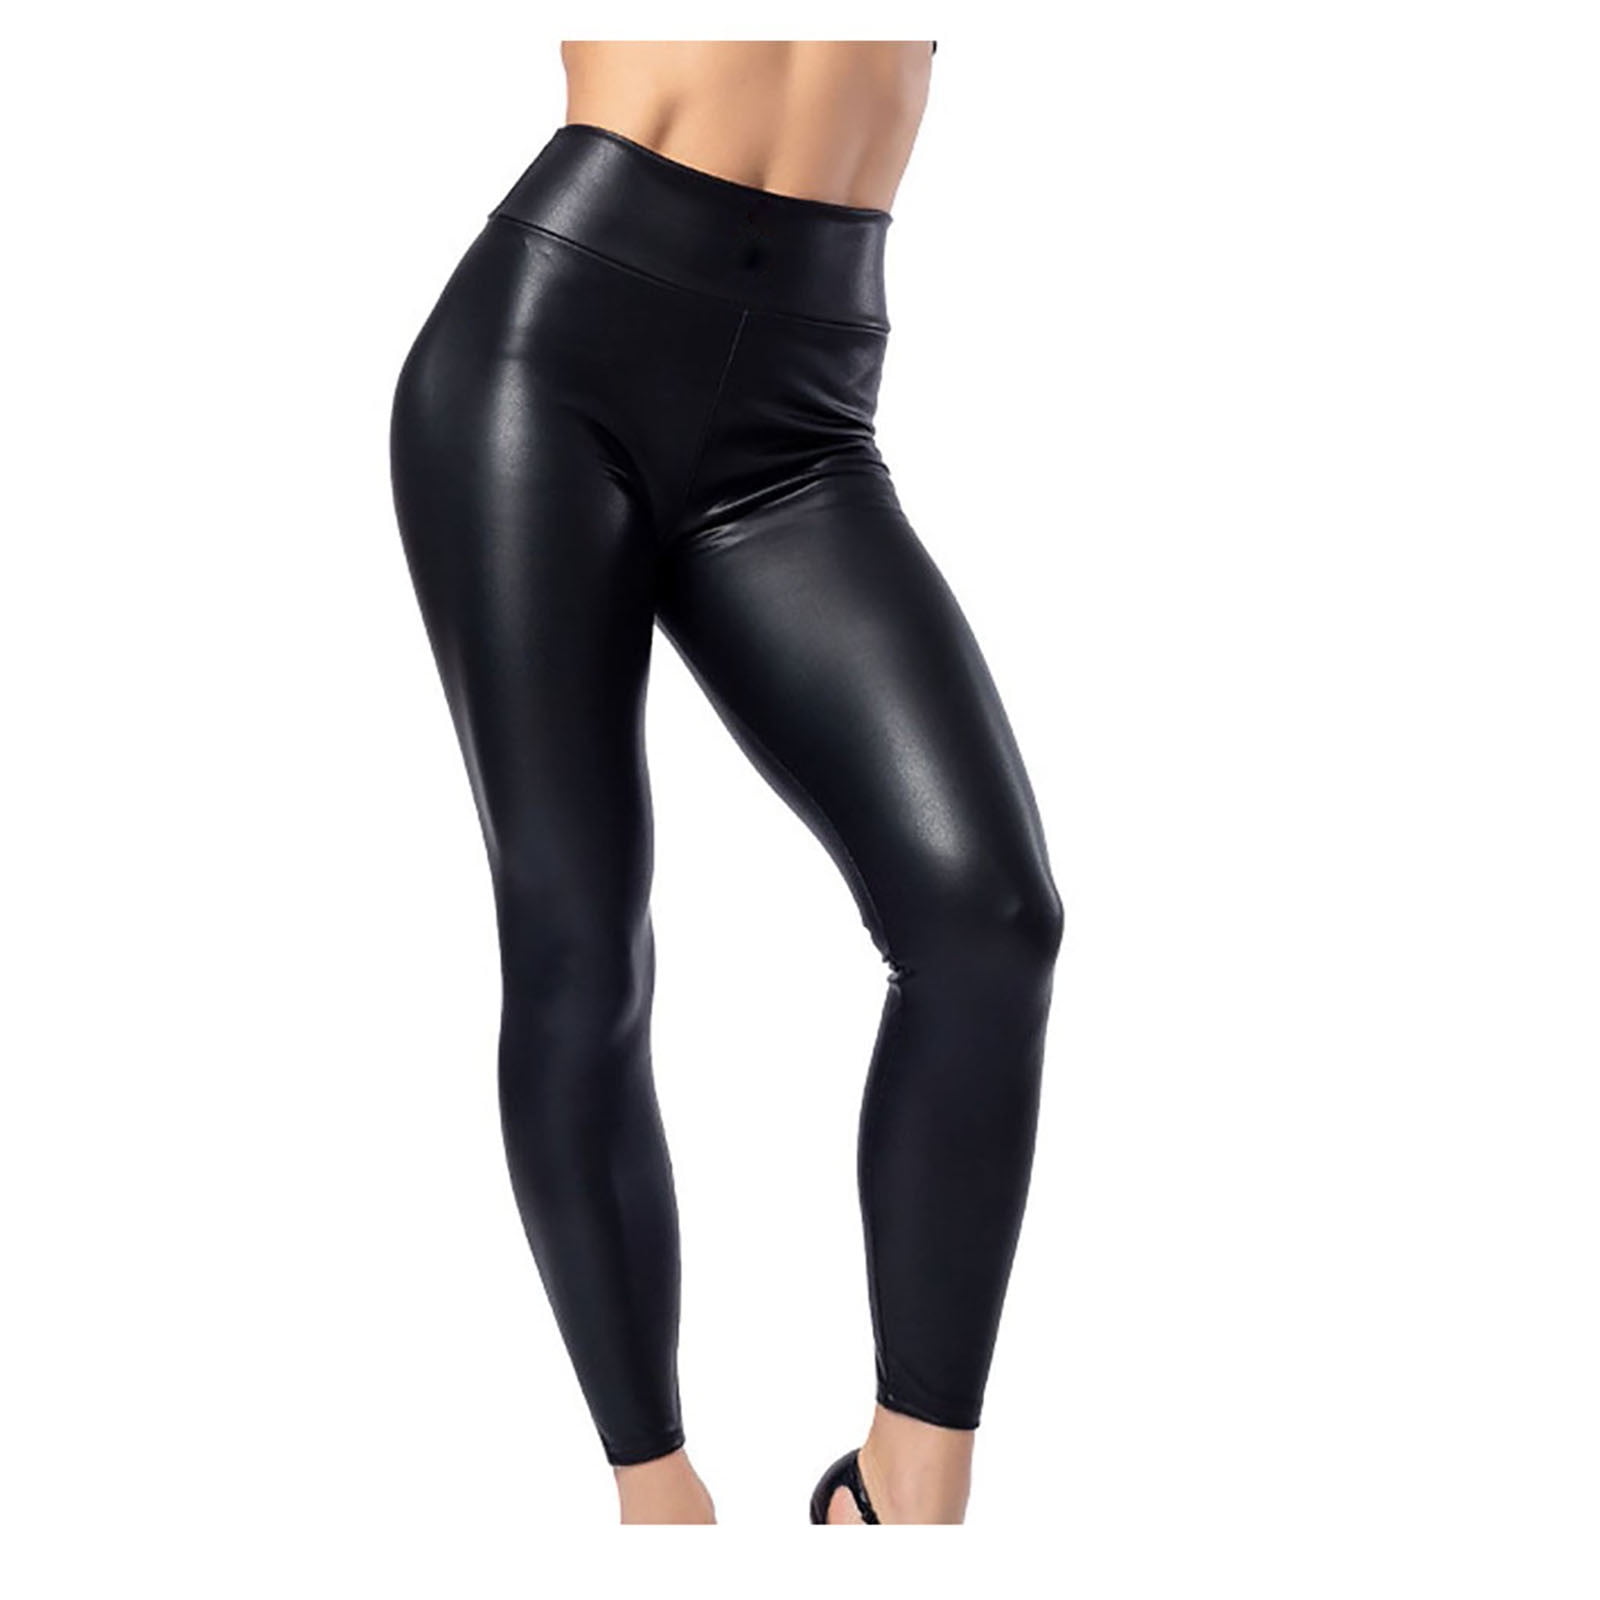 Leggings - Animal Print Croco Black - Running - Yoga Pants - Fitness - –  BEST WEAR - See Through Shirts - Sheer Nylon Tops - Second Skin -  Transparent Pantyhose - Tights - Plus Size - Women Men